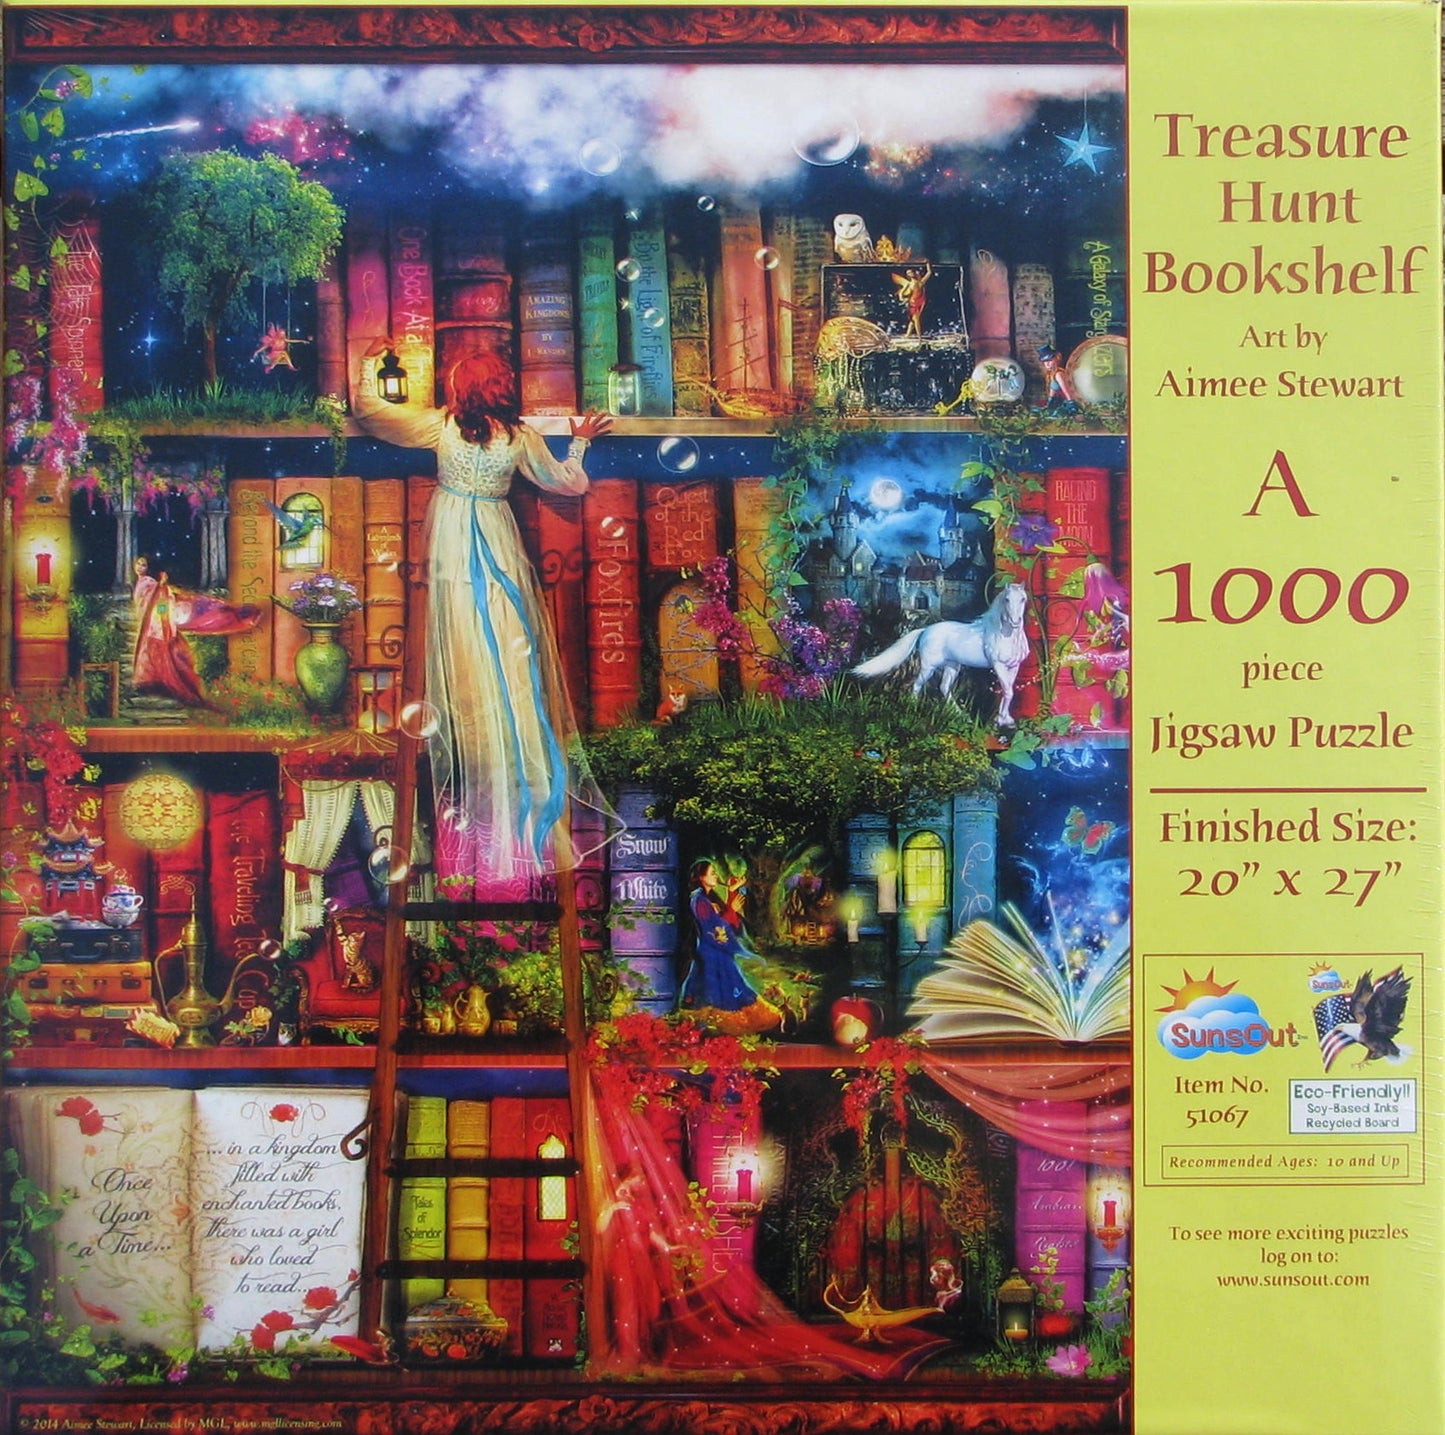 Treasure Hunt Bookshelf by Aimee Stewart, 1000 Piece Puzzle